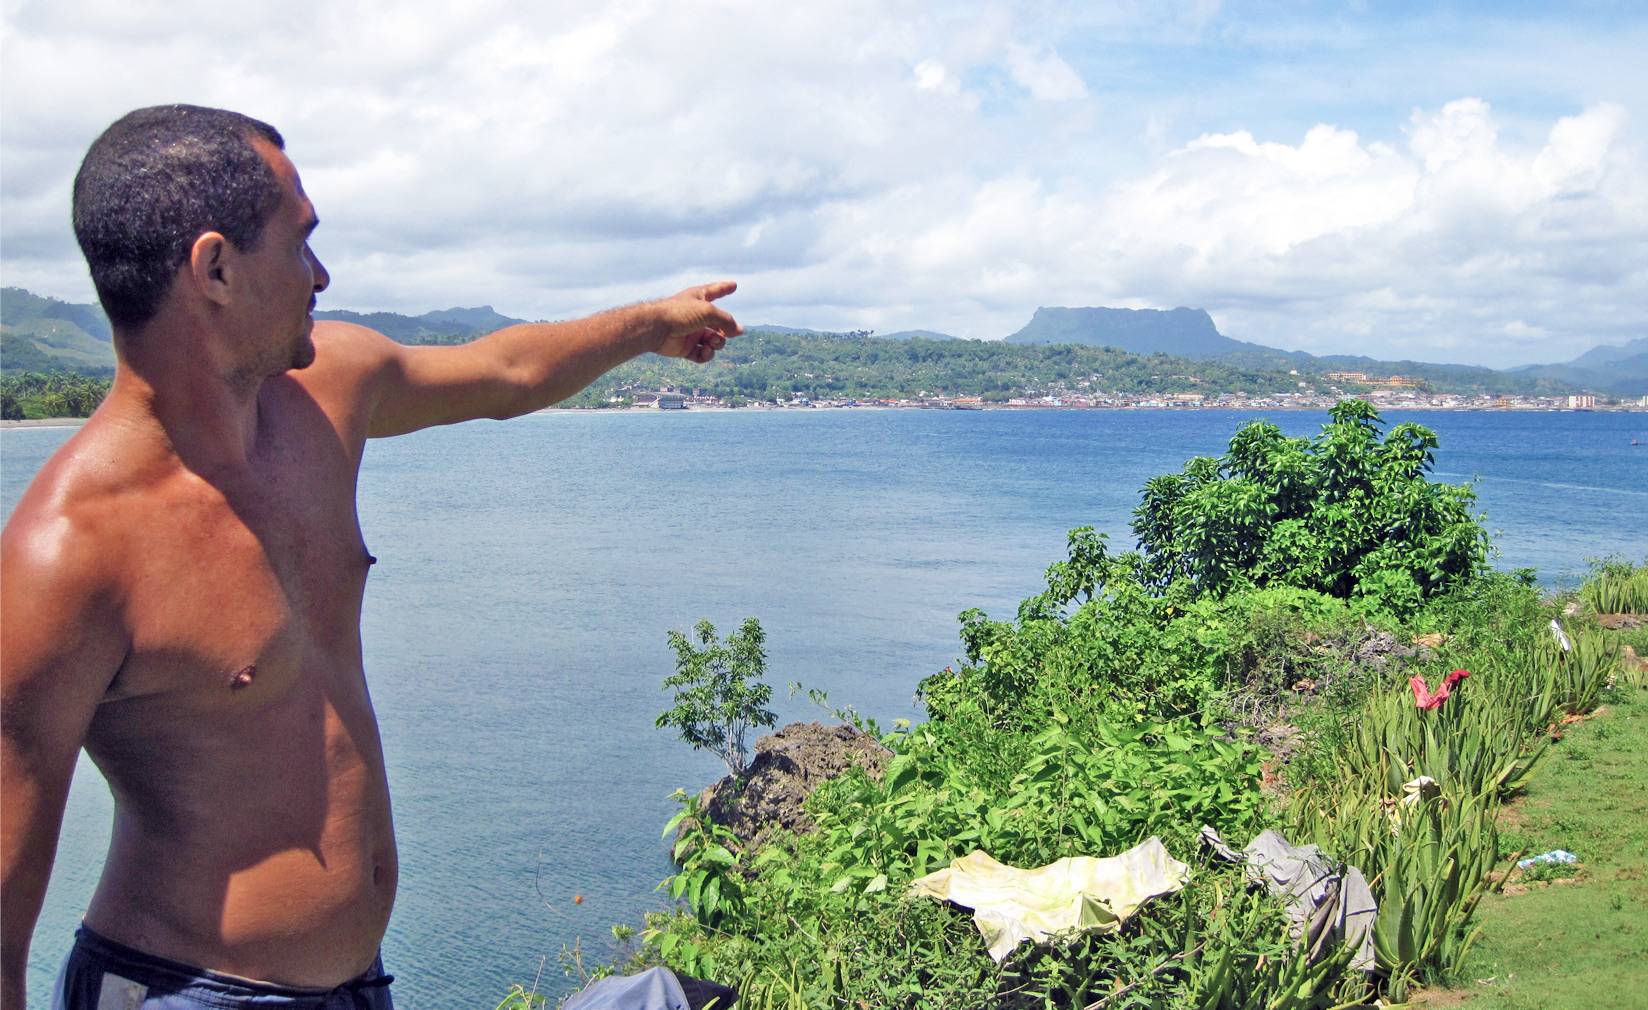 A local man in Baracoa, Cuba, points towards the Yunke tabletop mountain